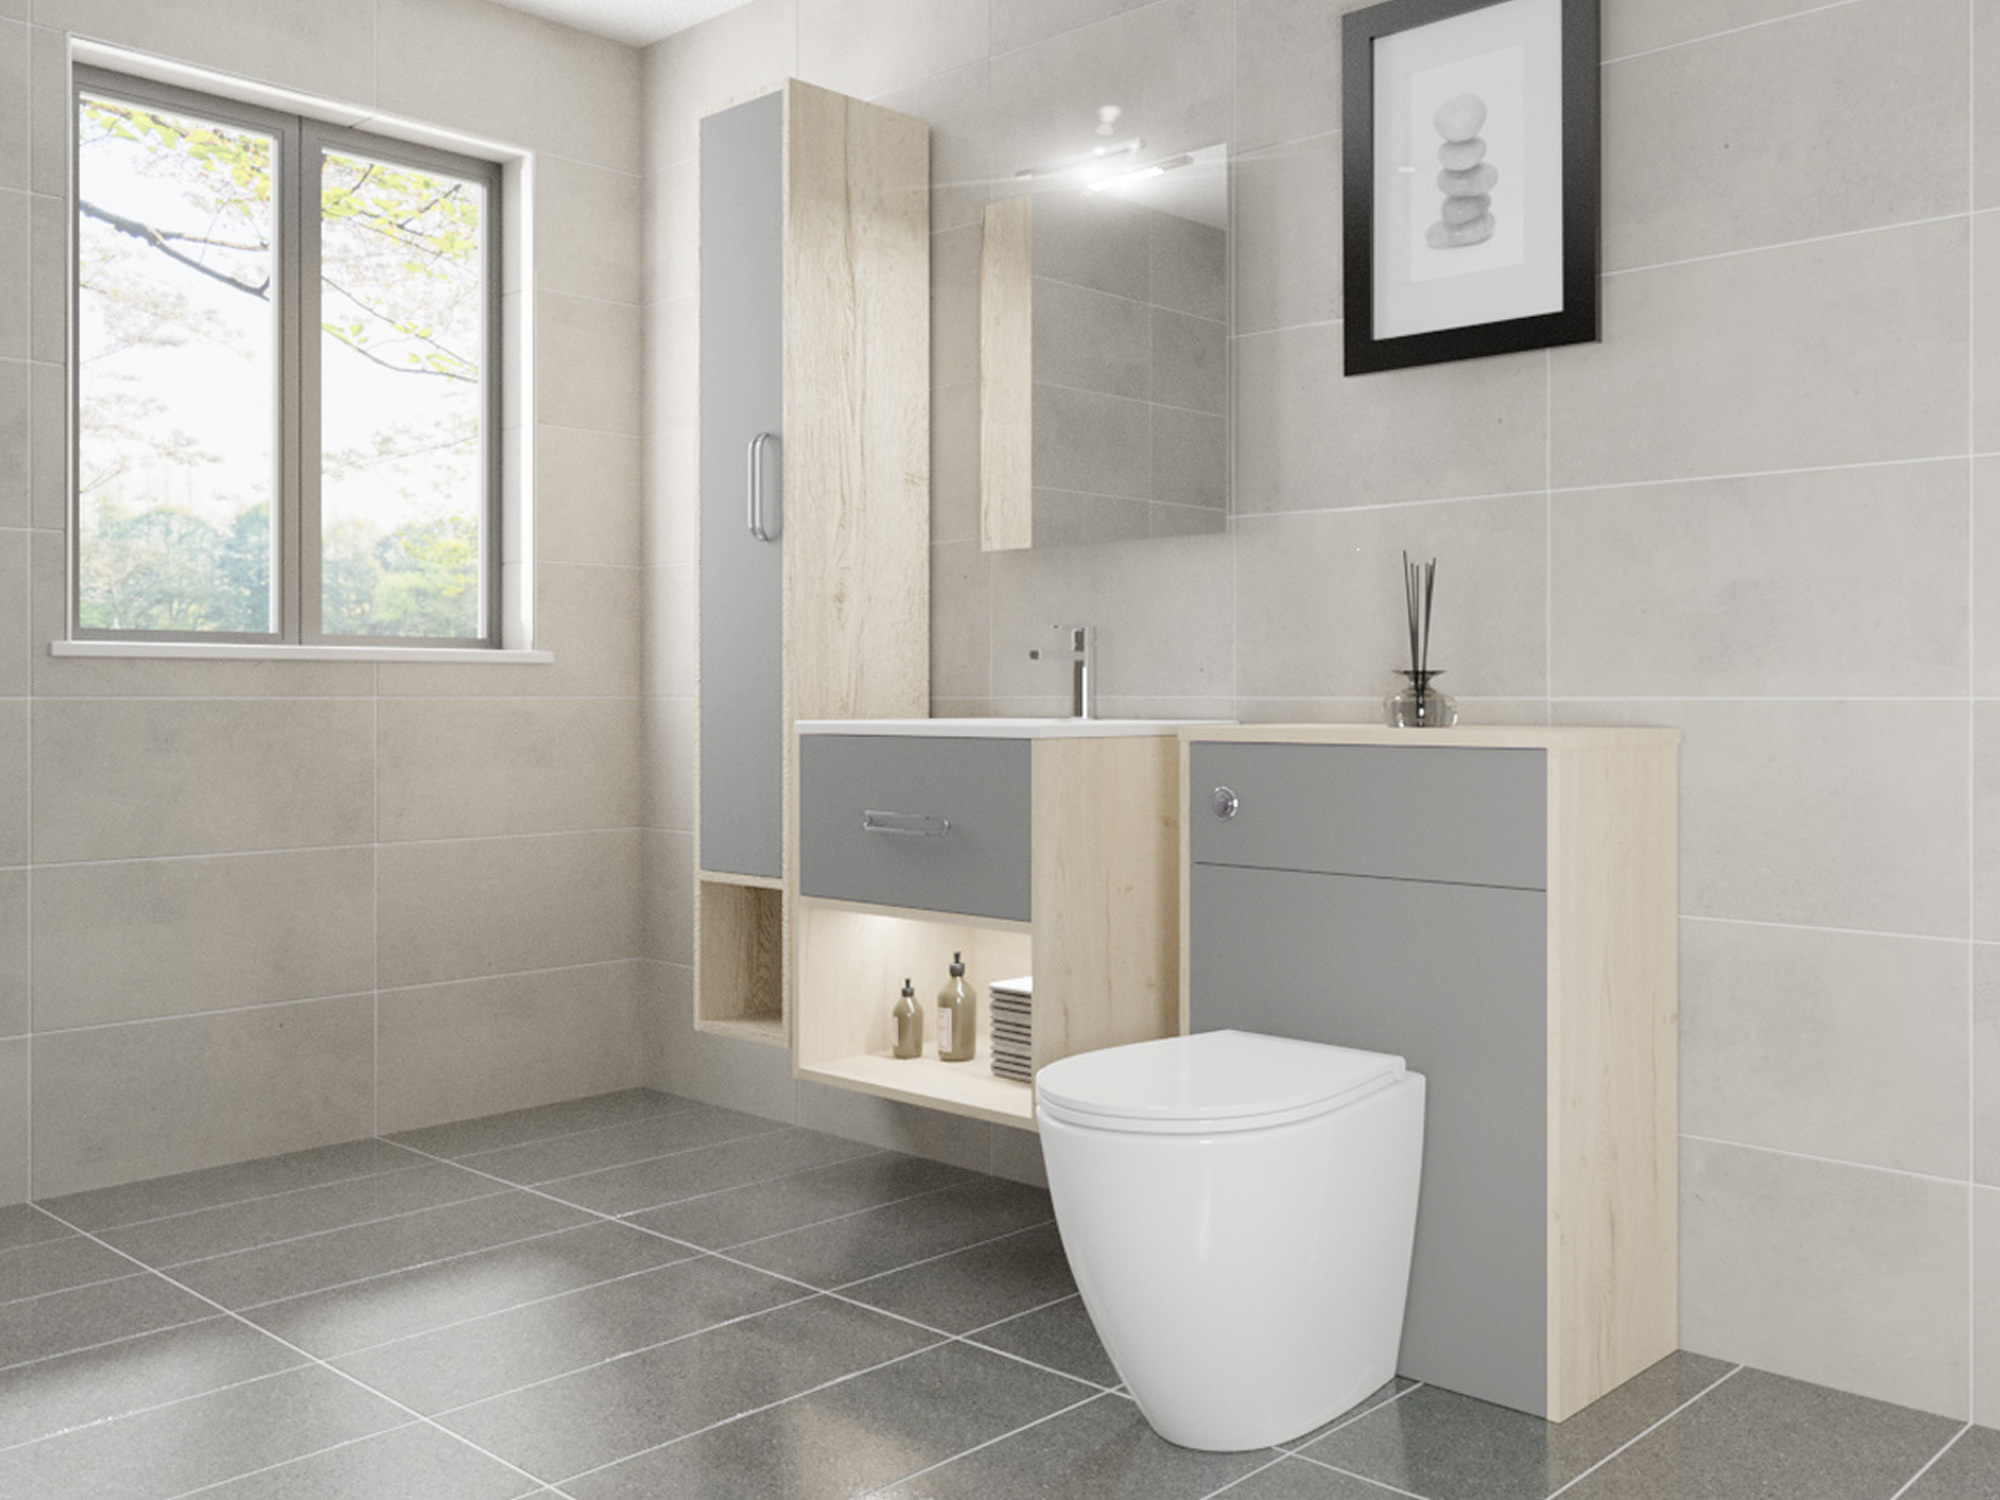 Design Apri Reed Green Bathroom